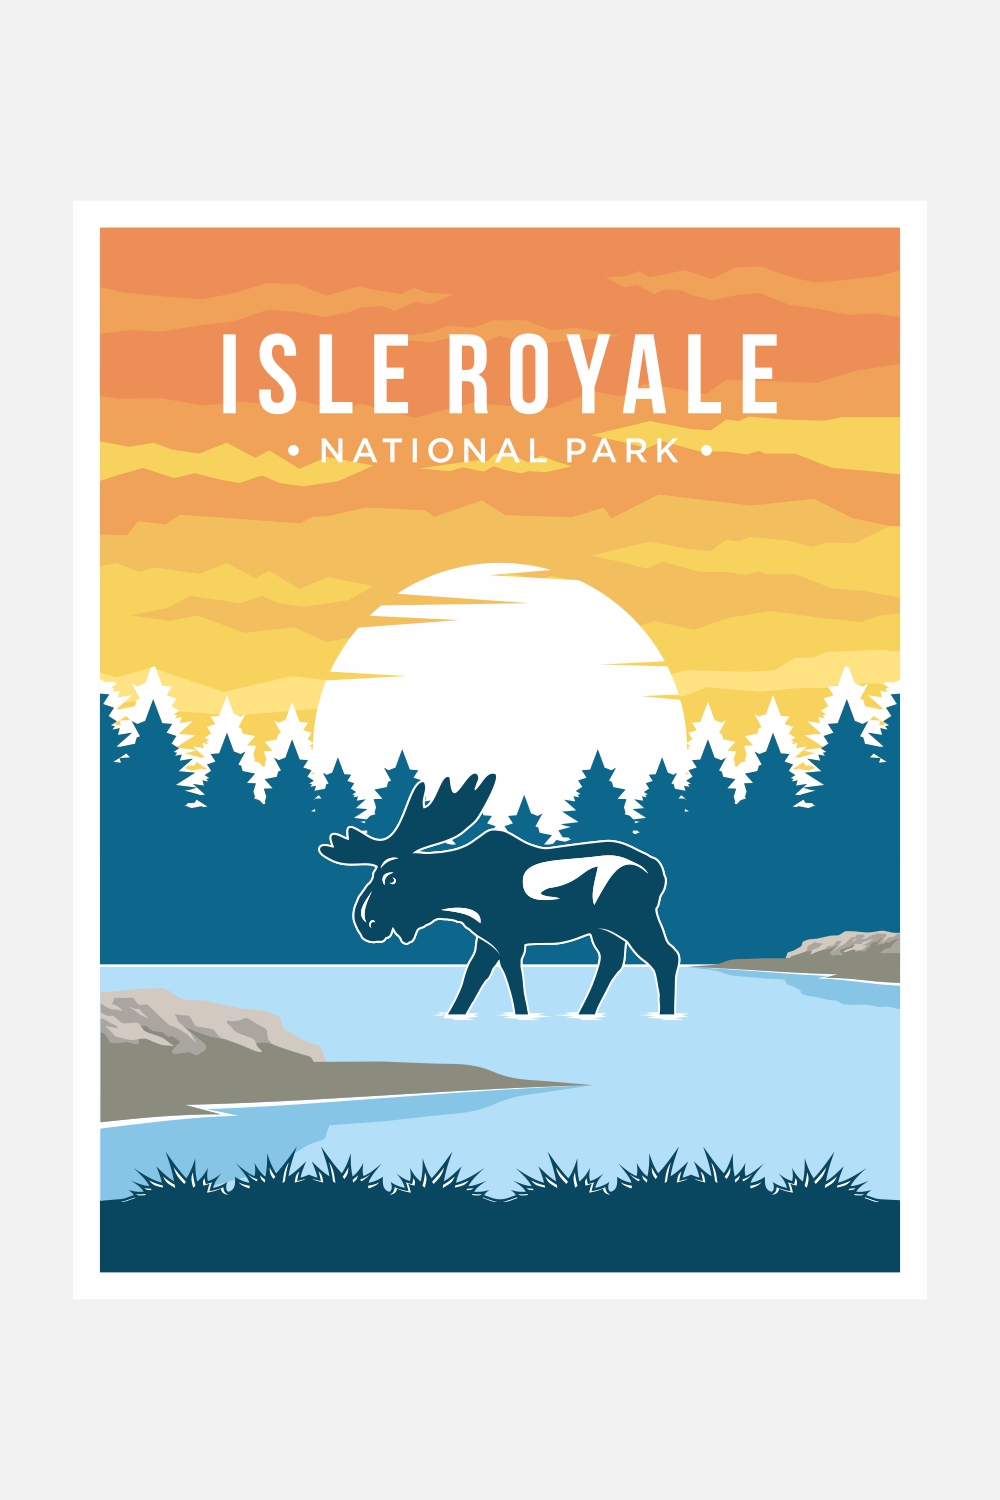 Isle Royale national park poster vector illustration design – Only $8 pinterest preview image.